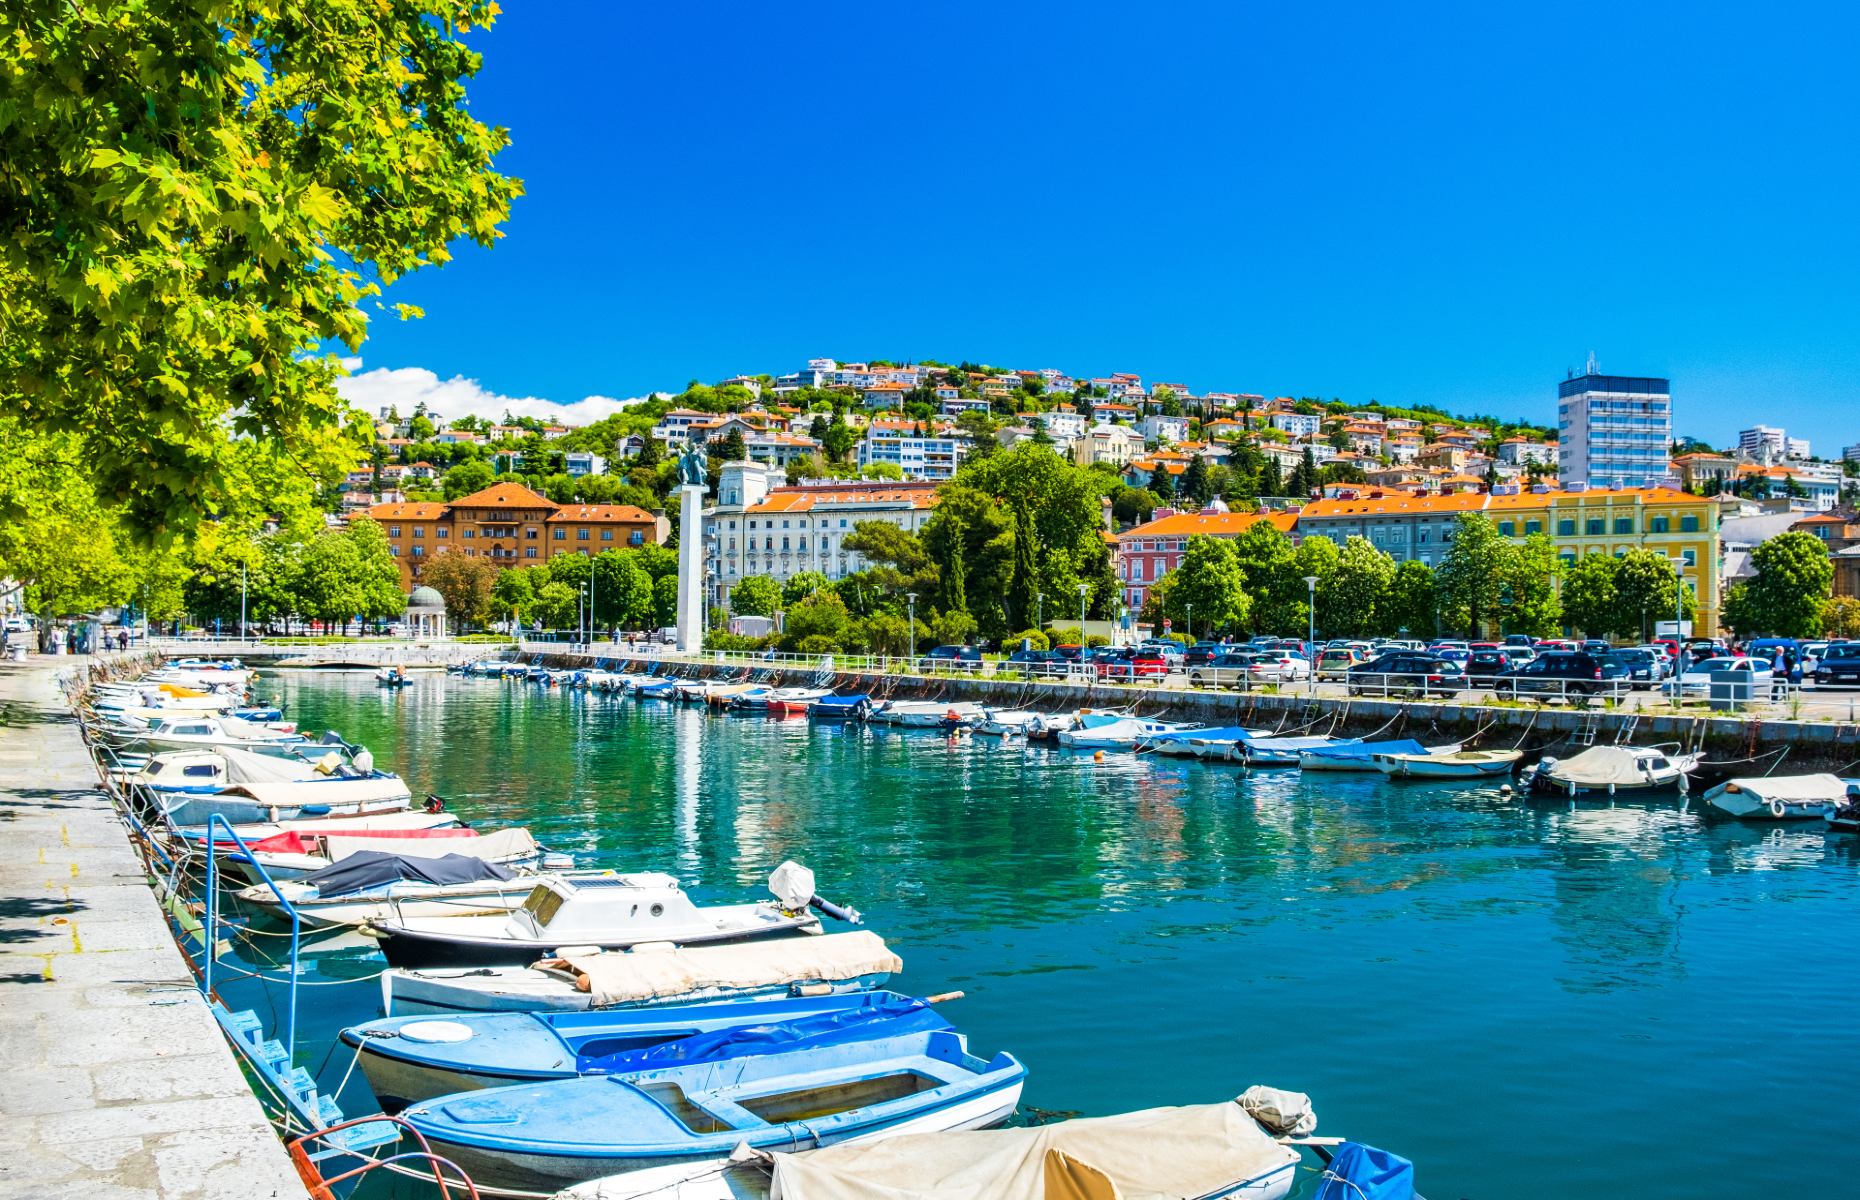 Port city of Rijeka in the Kvarner region (Image: Ilija Ascic/Shutterstock)